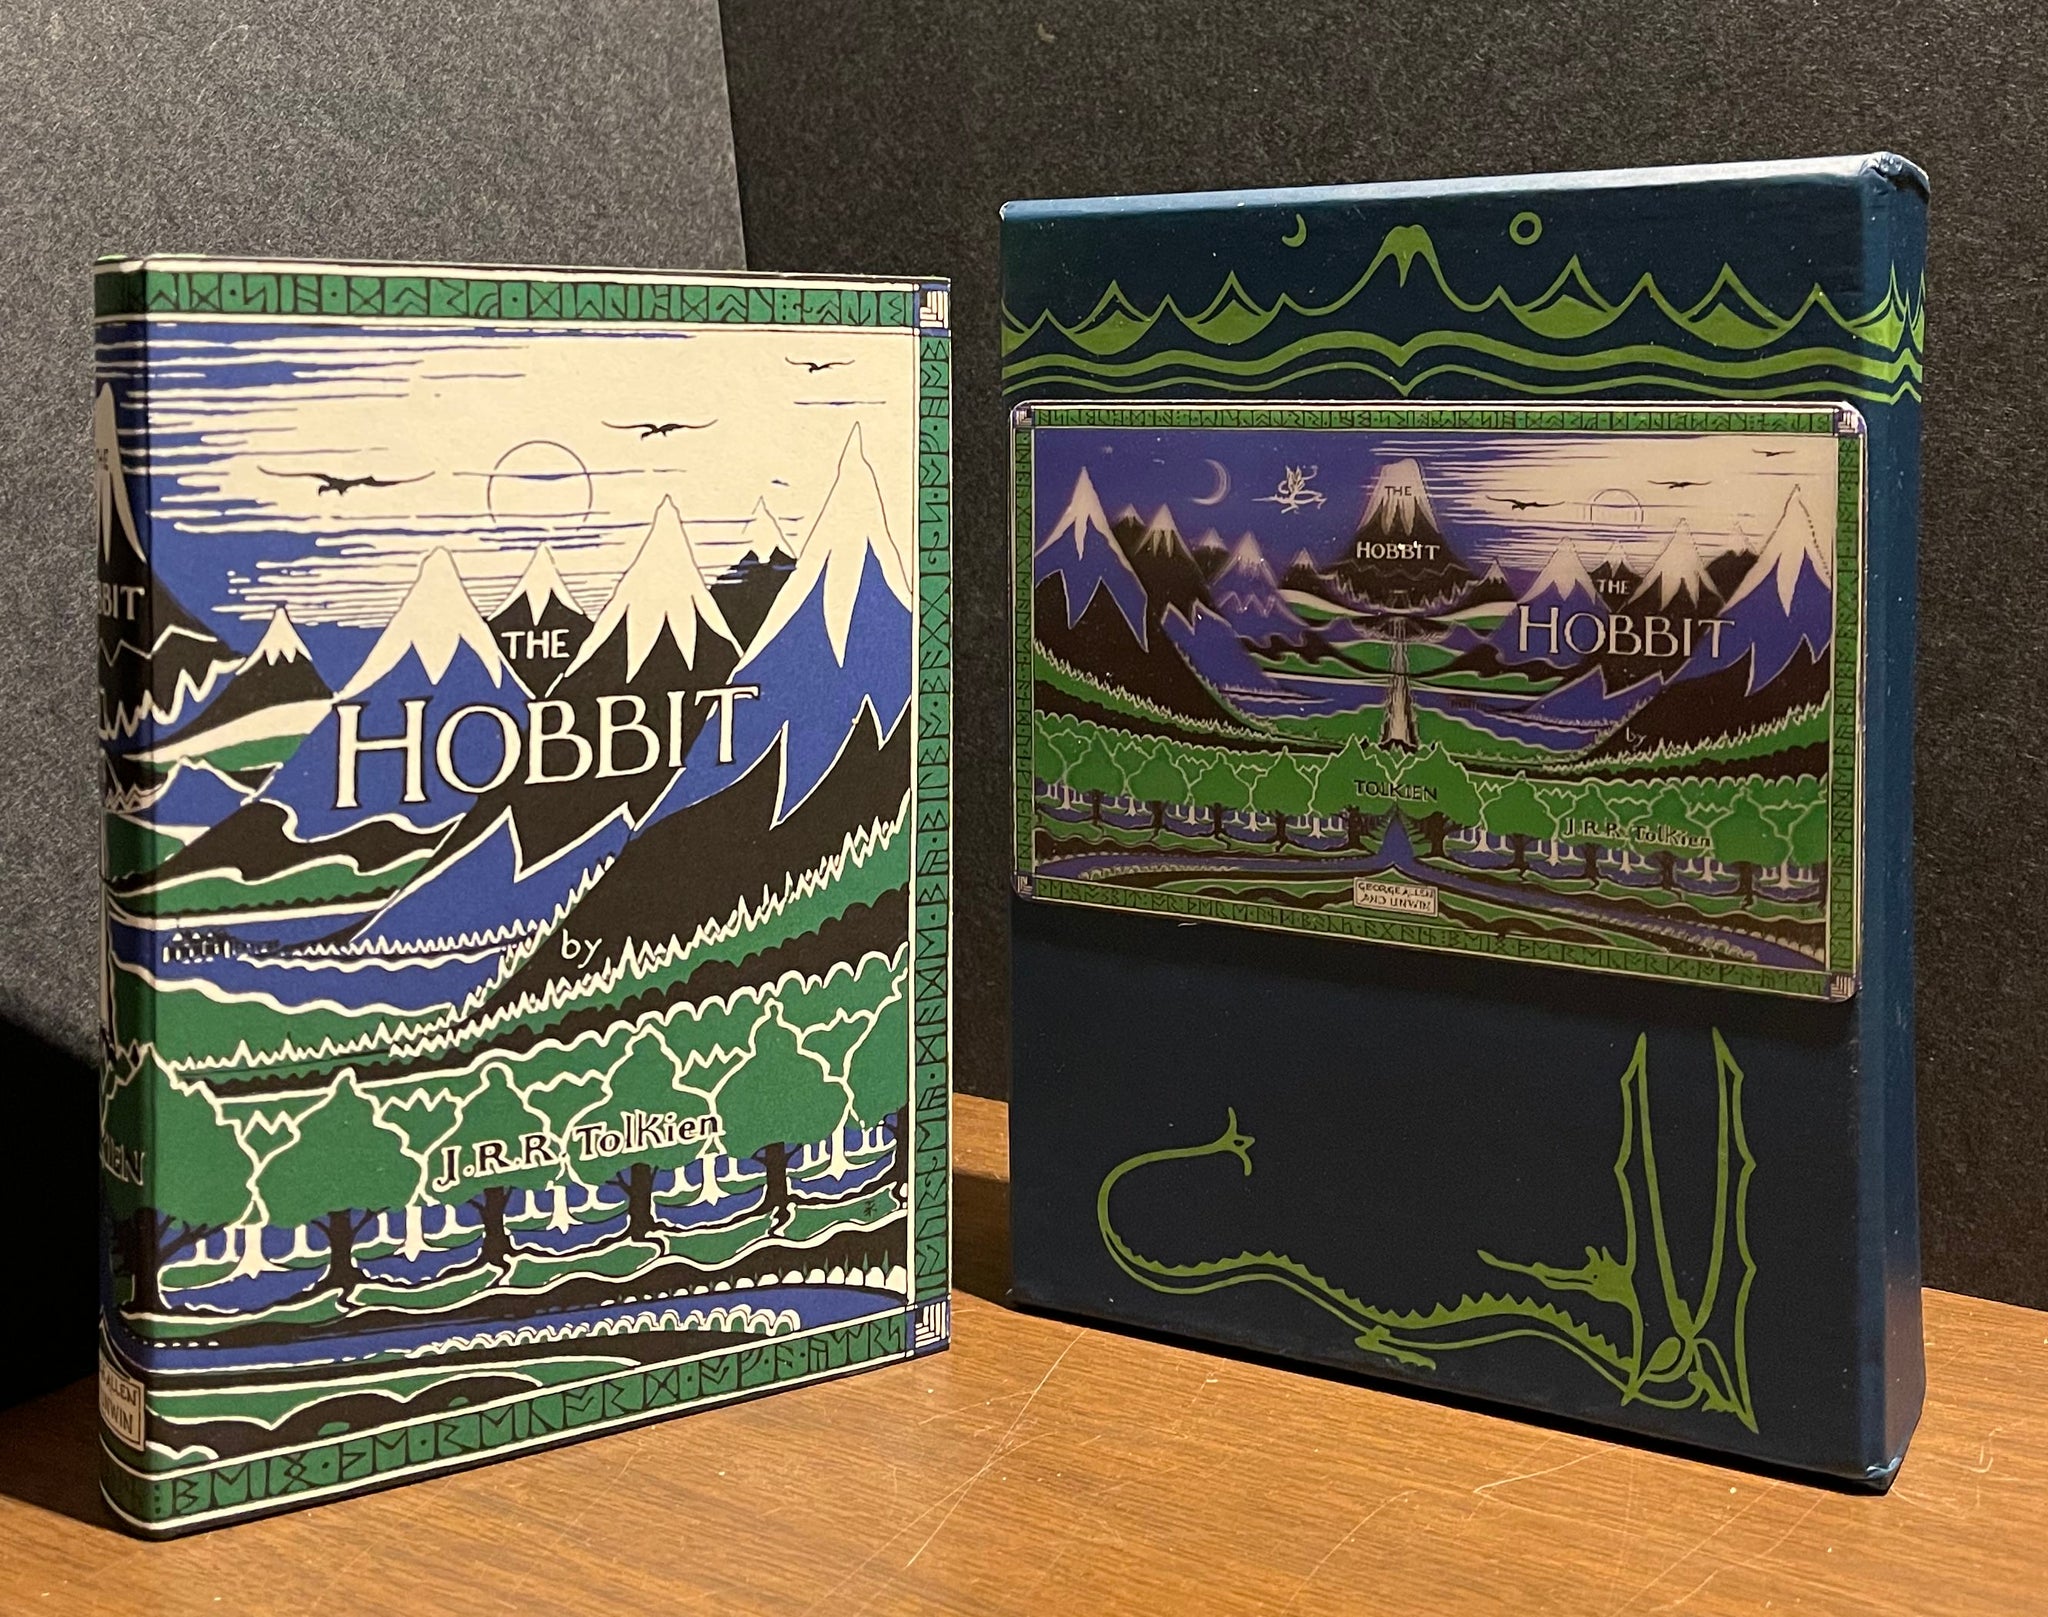 the hobbit book original